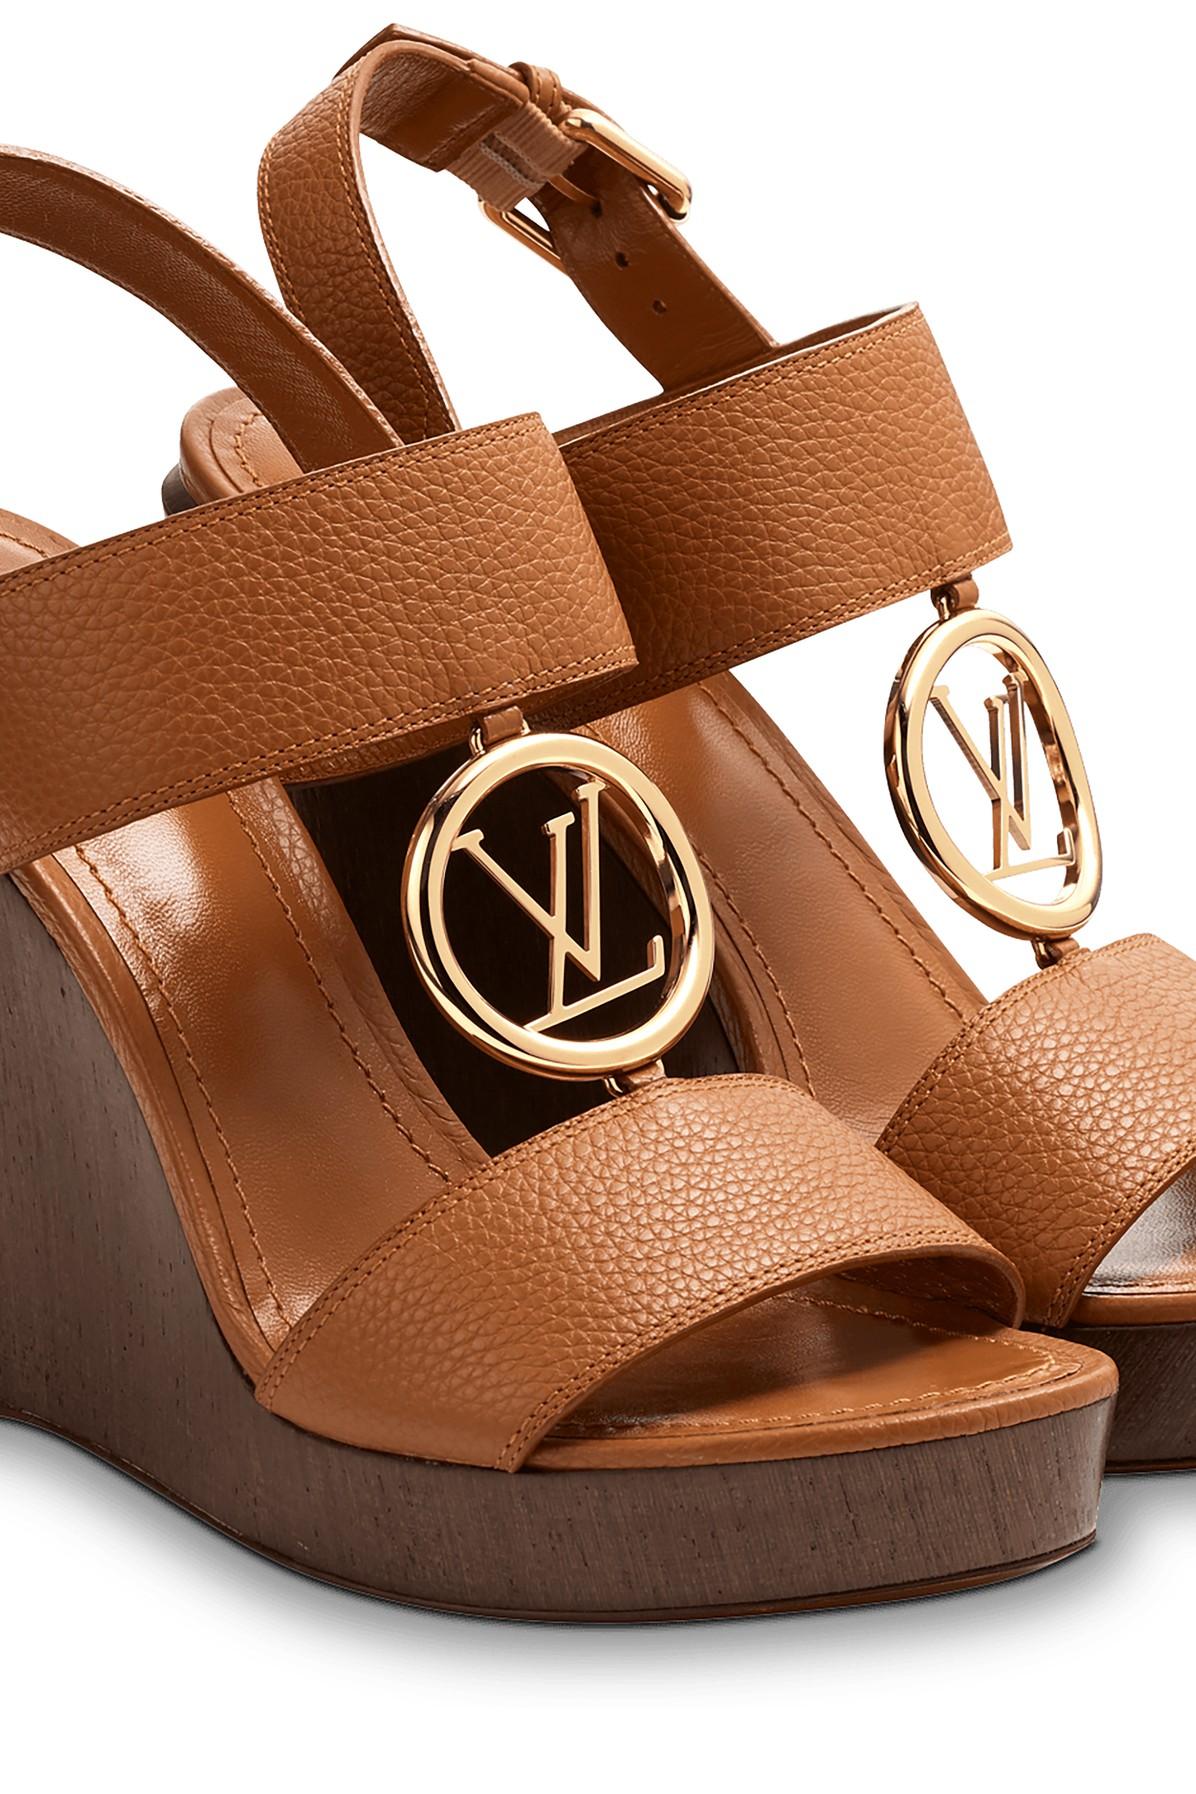 Women's Louis Vuitton Sandal heels from $675